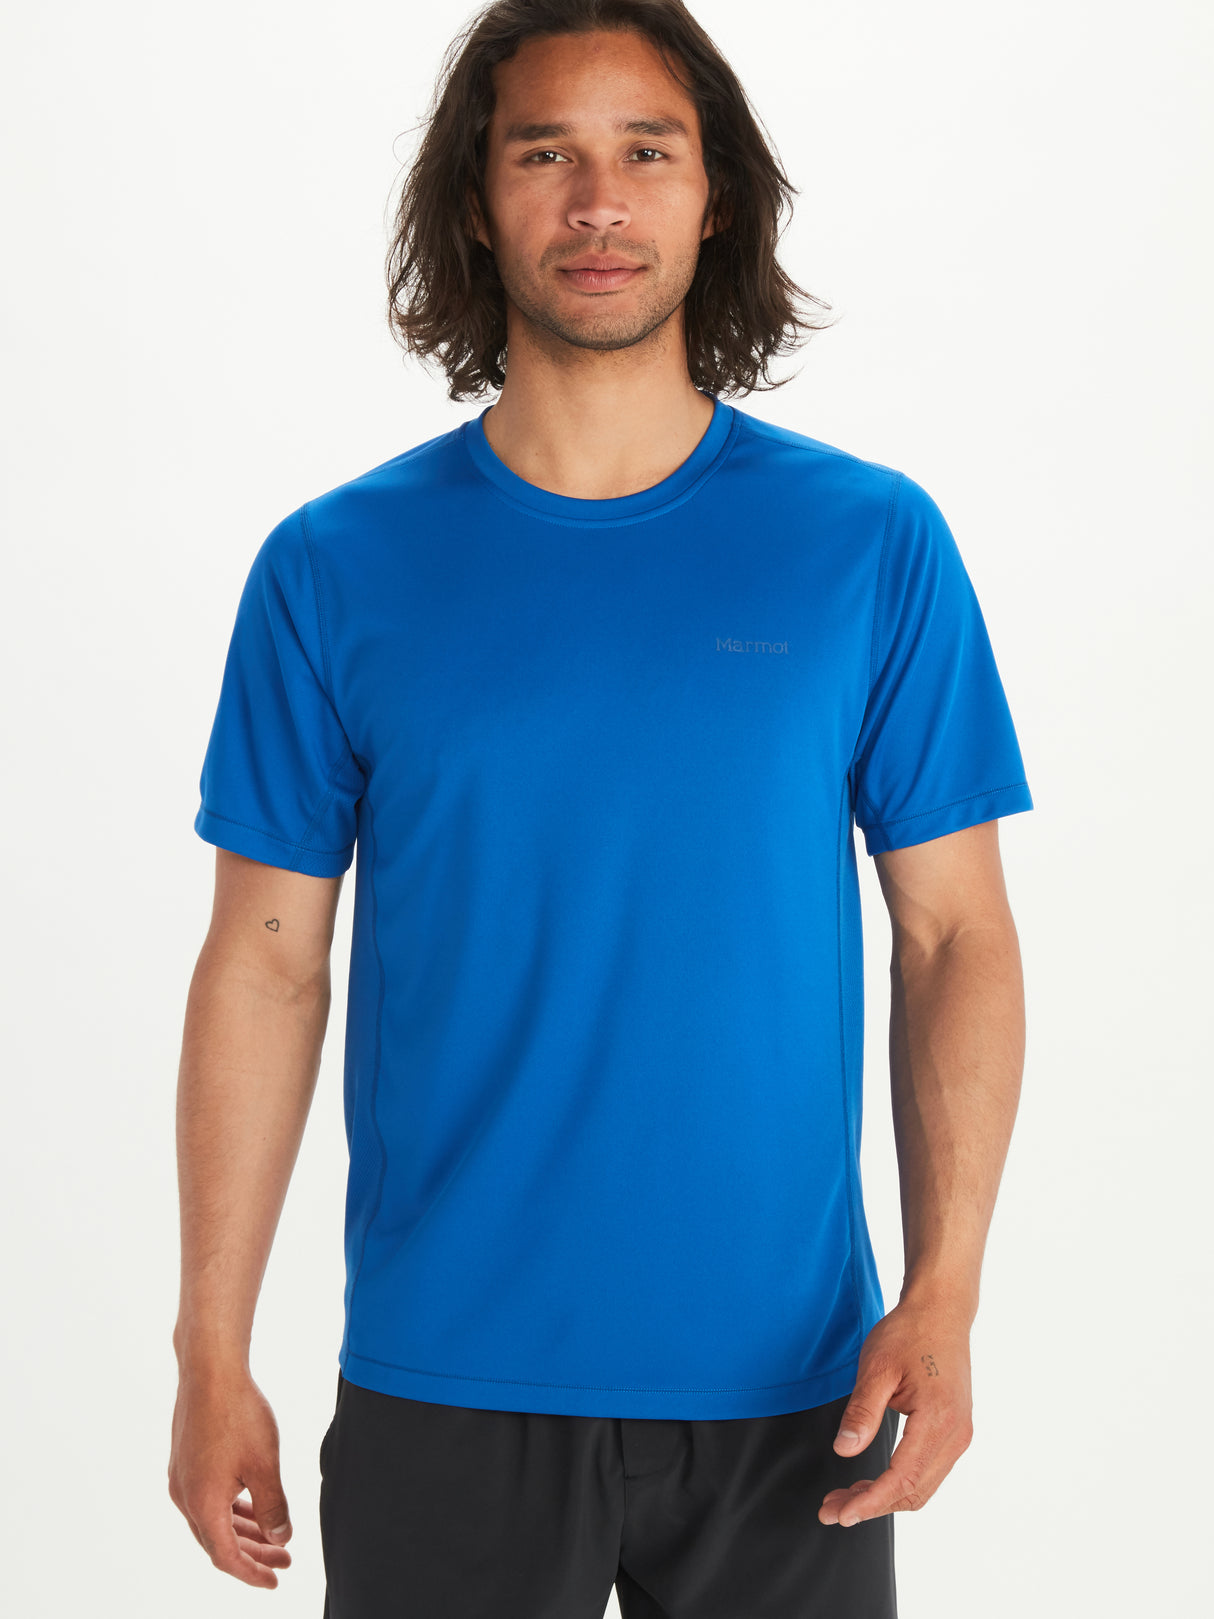 Windridge Short-Sleeve T-Shirt - Men